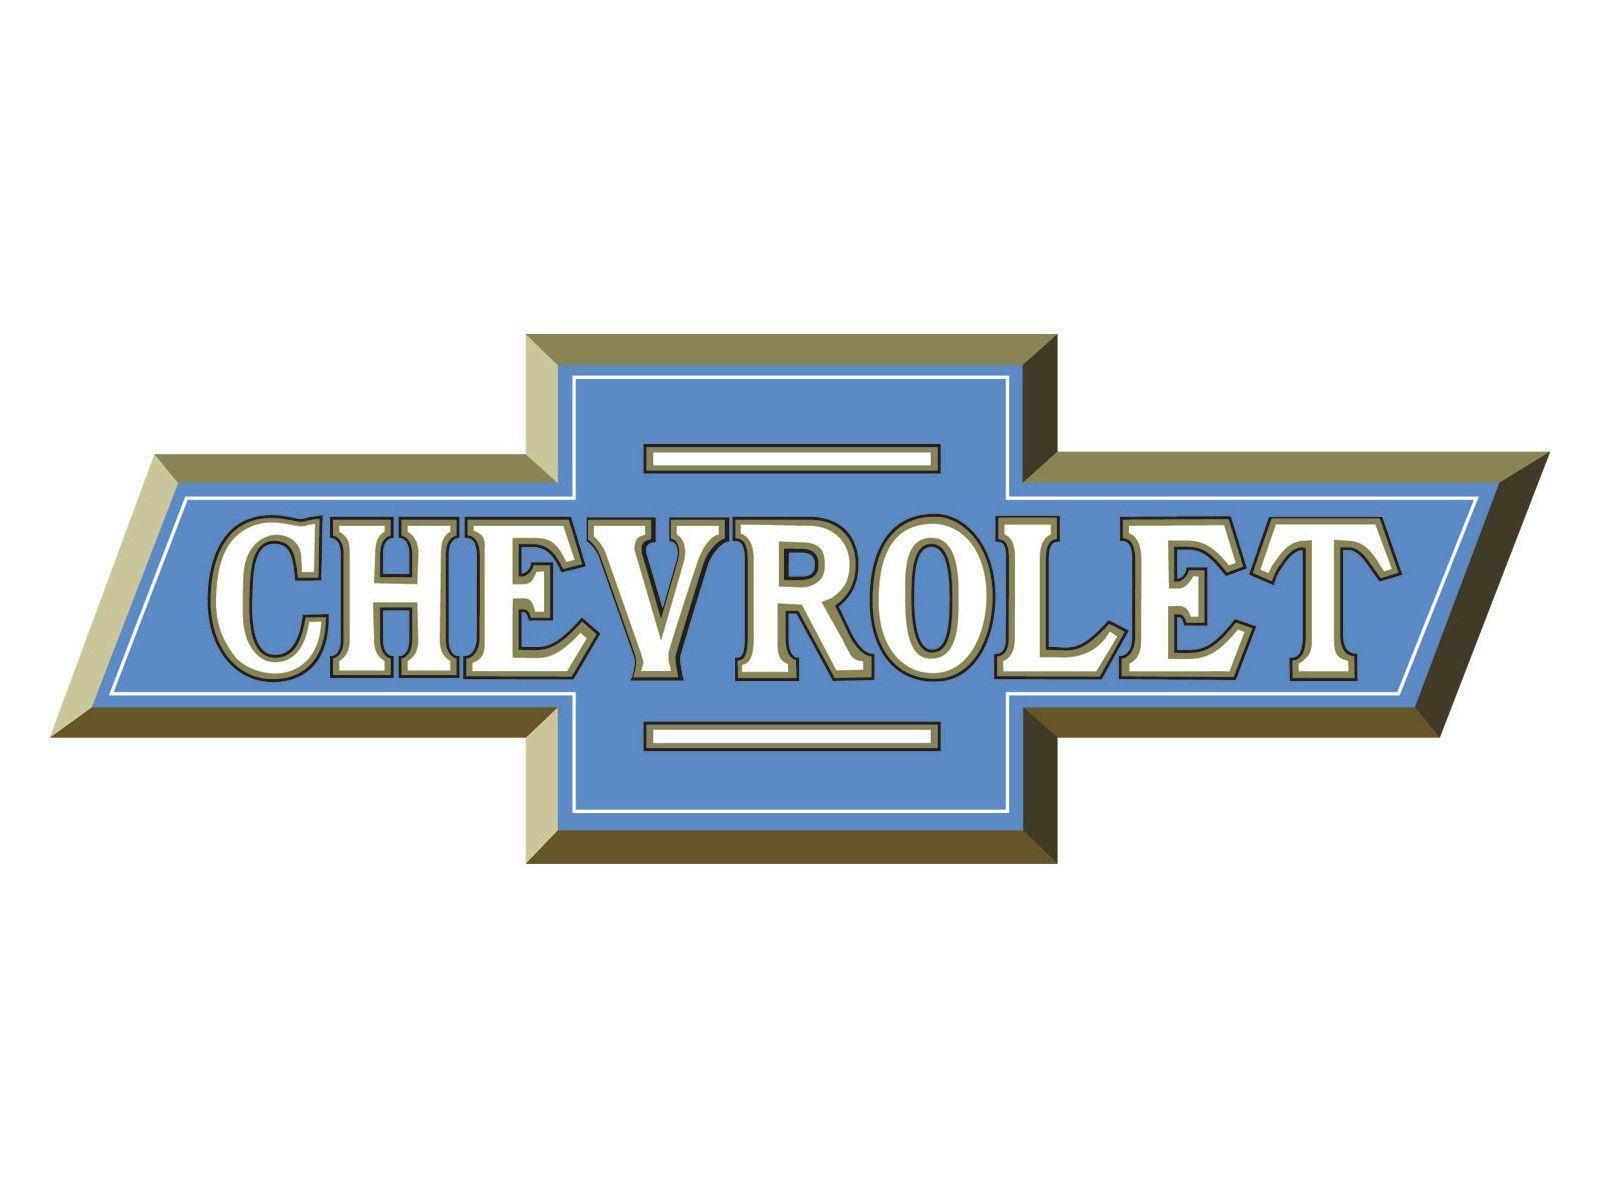 Chevrolet Logo 26 157813 Image HD Wallpaper. Wallfoy.com